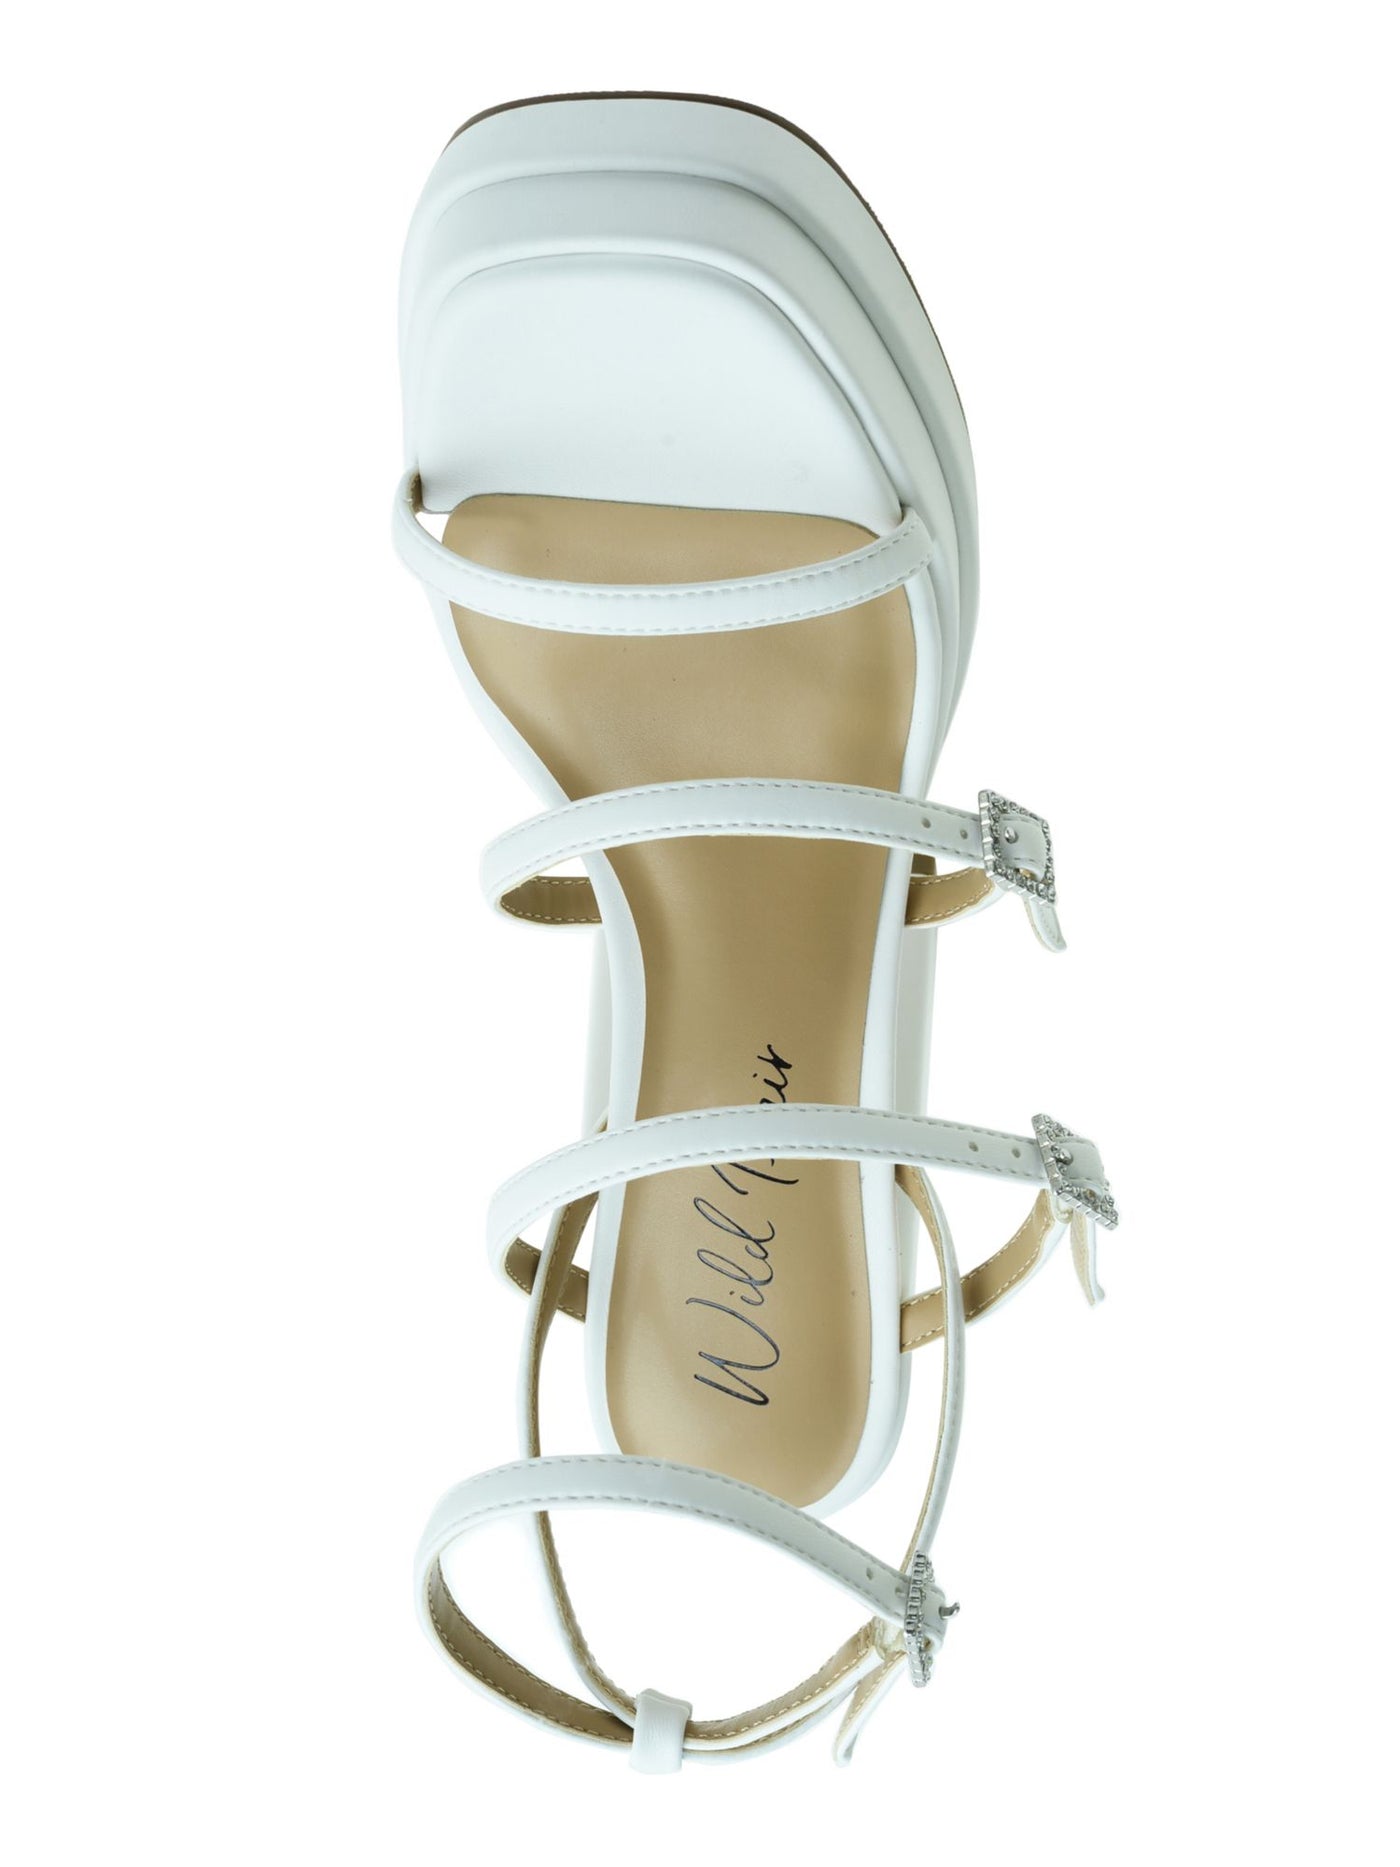 WILD PAIR Womens White 1-1/2" Platform Padded Ankle Strap Goring Olyve Open Toe Block Heel Buckle Heeled Sandal 8.5 M